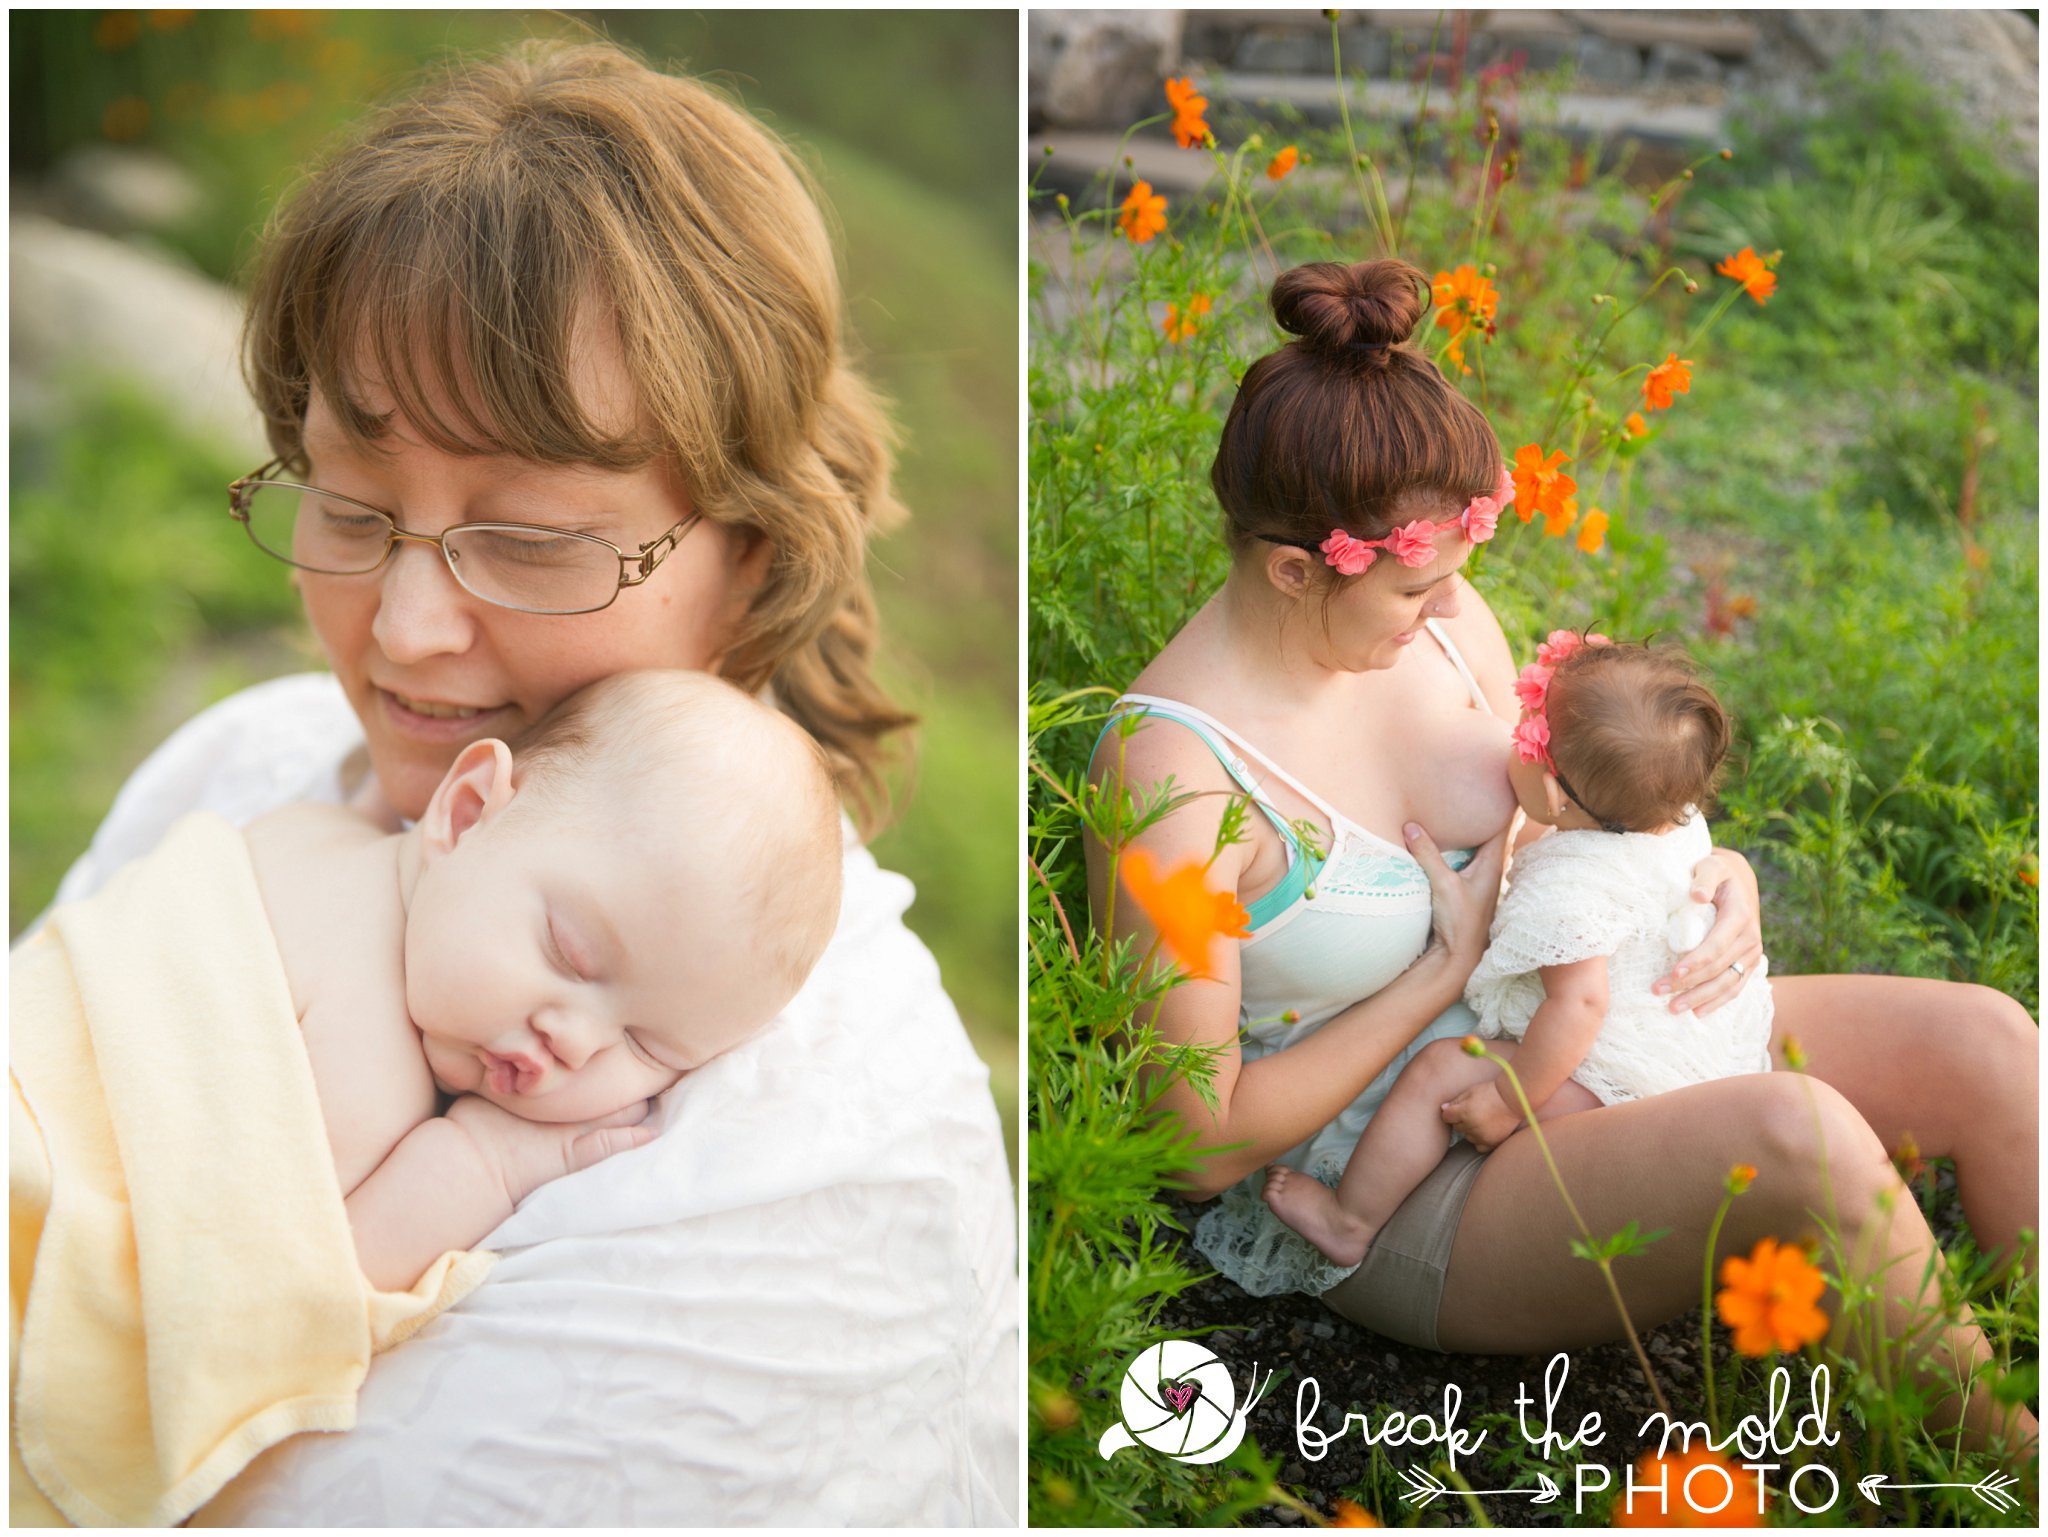 break-the-mold-photo-nursing-breastfeeding-session-womens-beauty-woman-body-nurse-breastfed (3).jpg